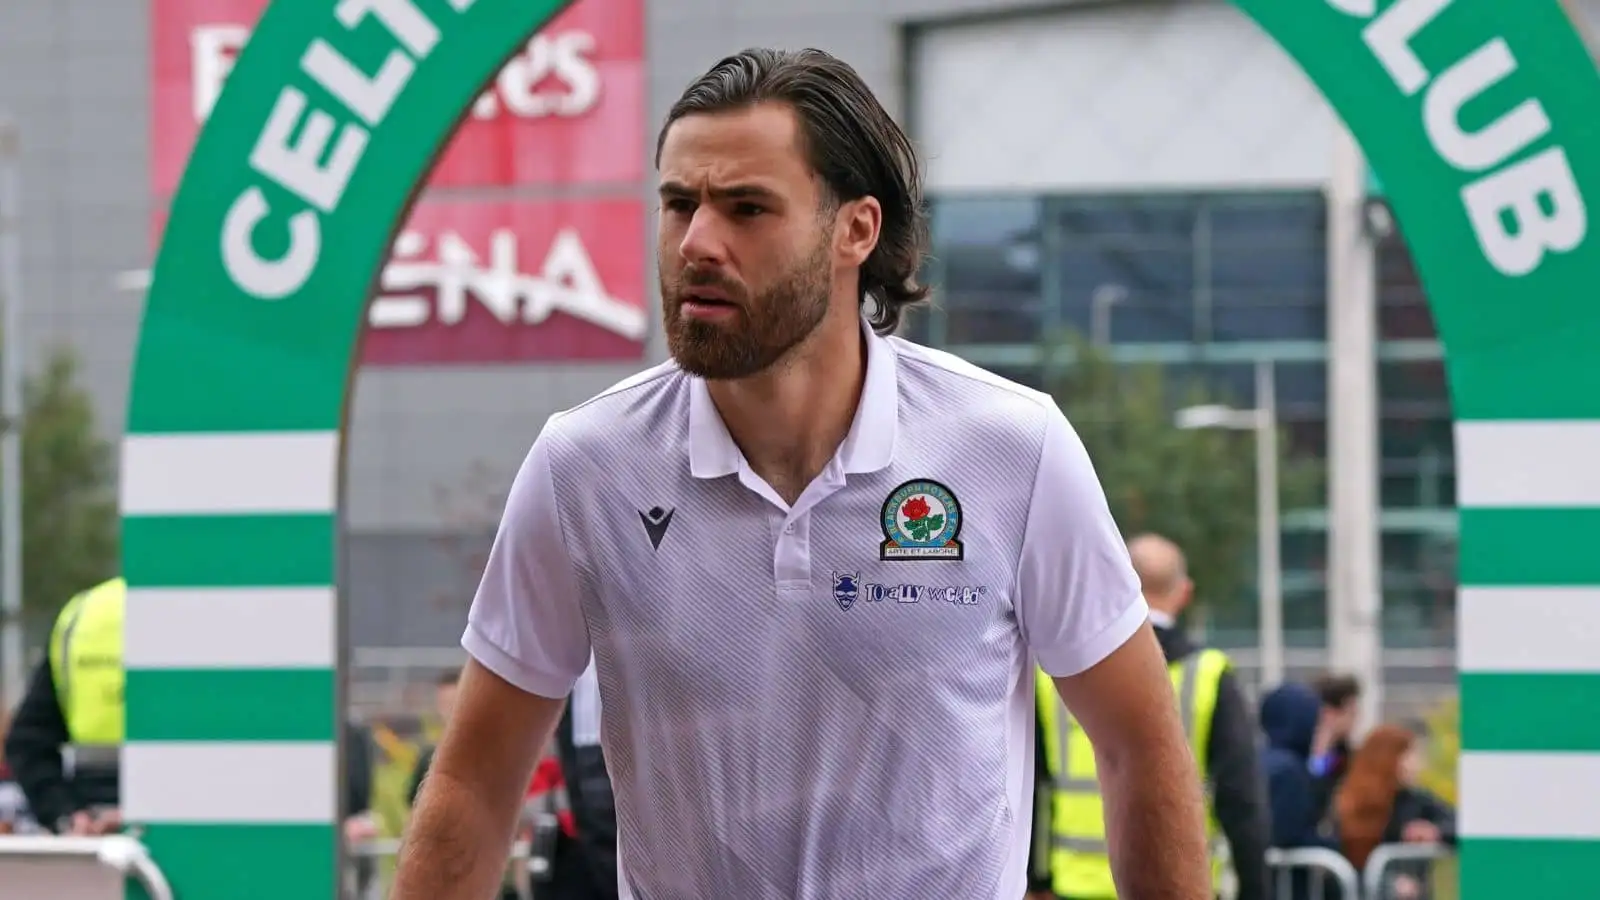 Ben Brereton Diaz of Blackburn Rovers arriving before a pre-season friendly match at Celtic Park, Glasgow